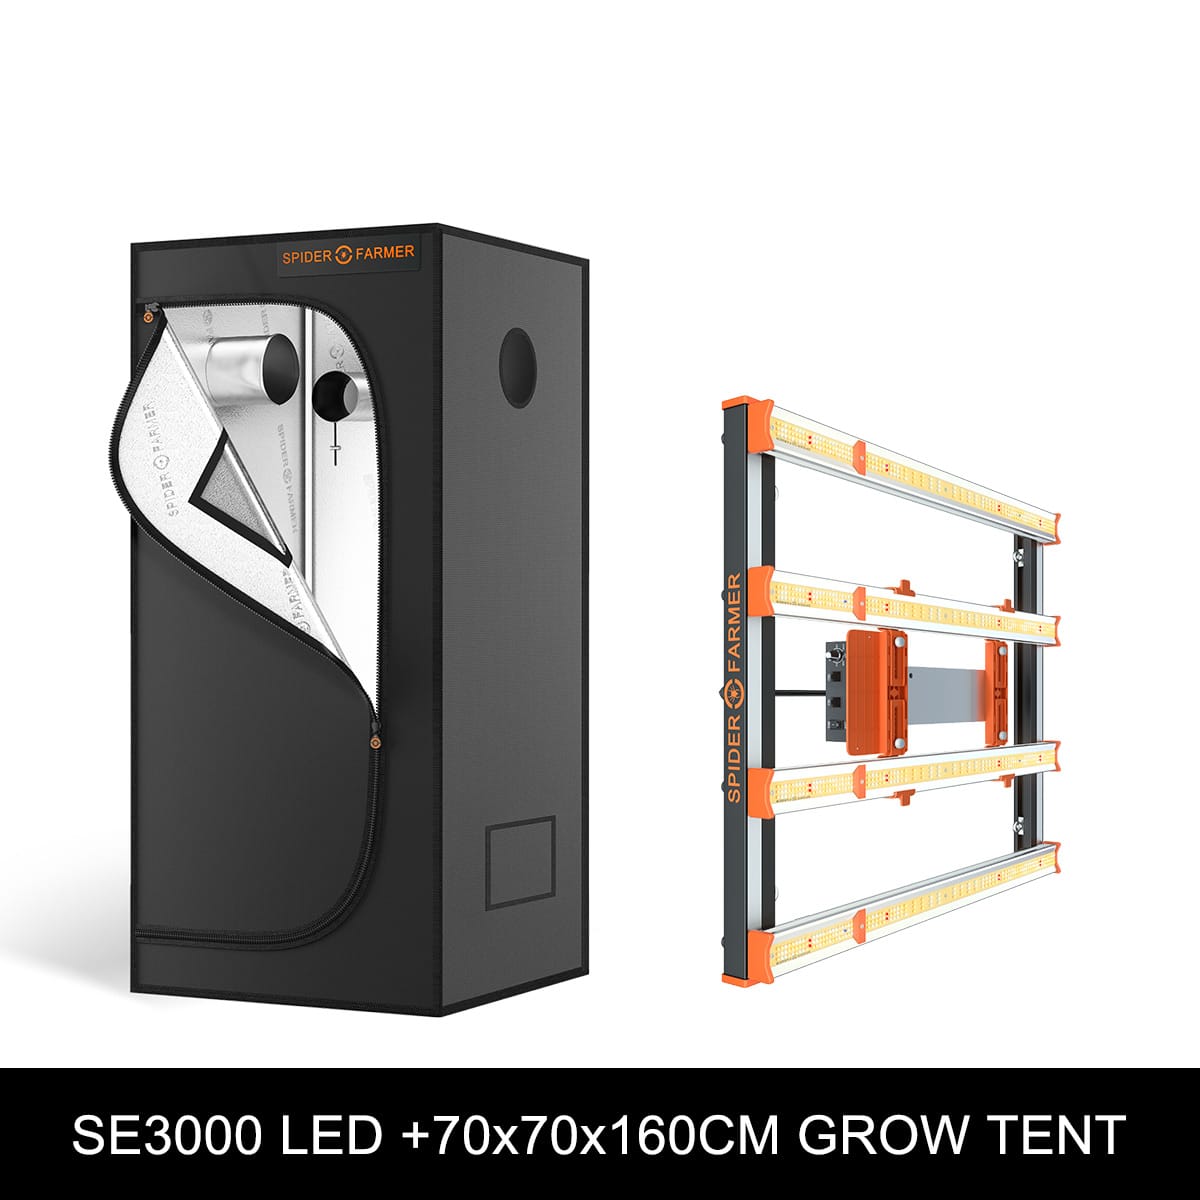 Spider Farmer SE3000 LED +70x70x160cm Grow Tent kits